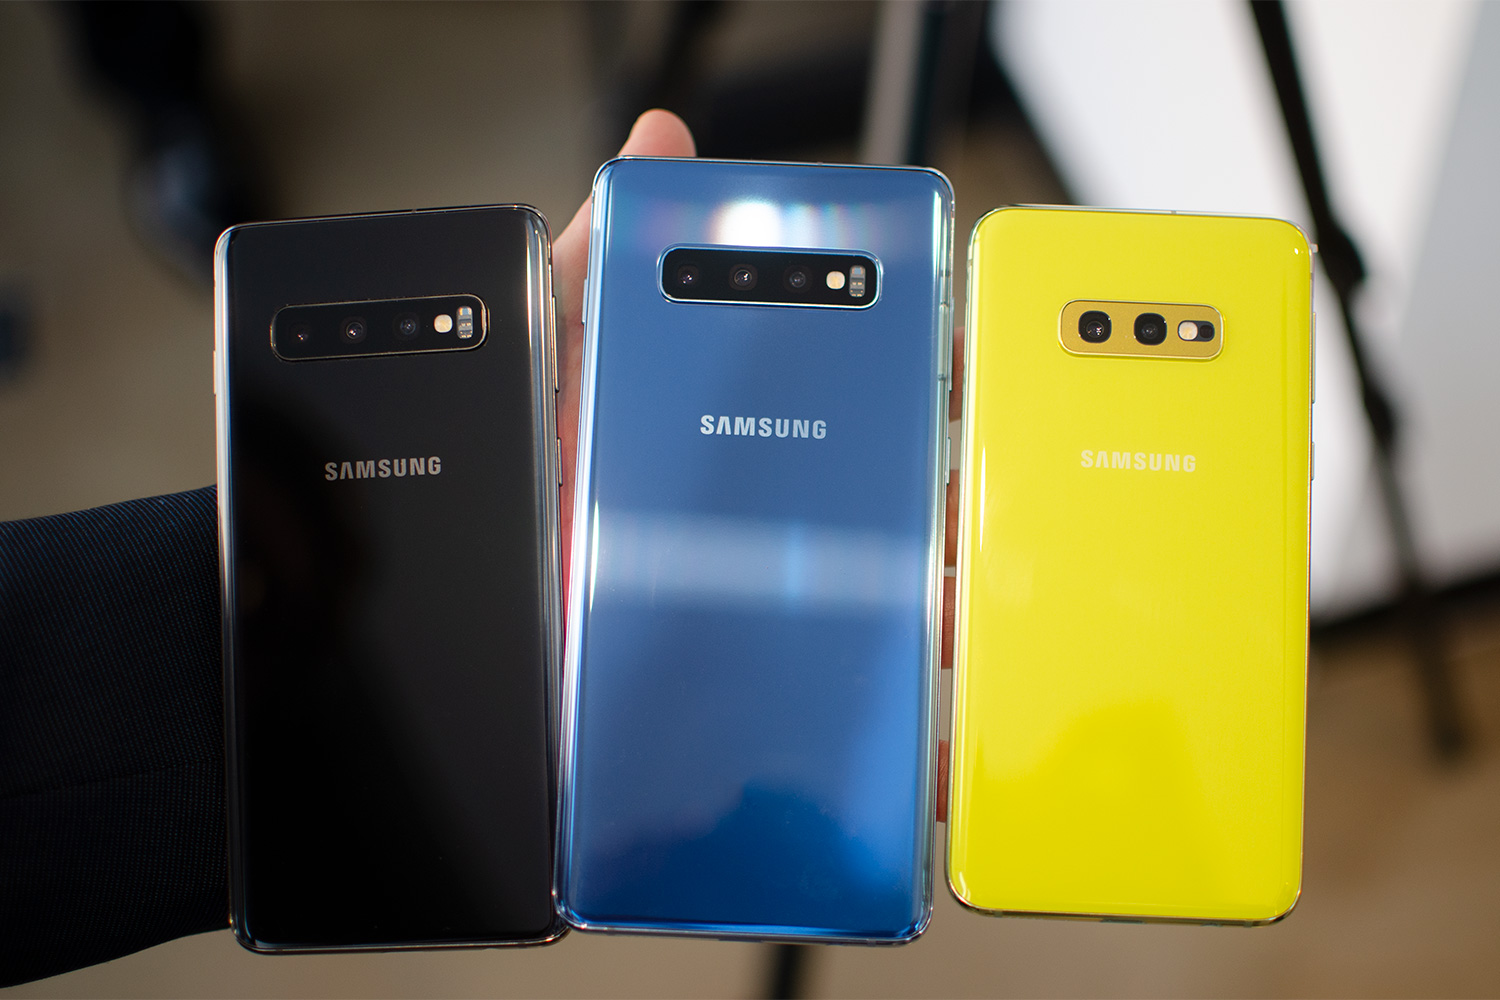 Galaxy S10 vs. S10 Plus vs. S10e vs. S10 5G: What Should You Buy?